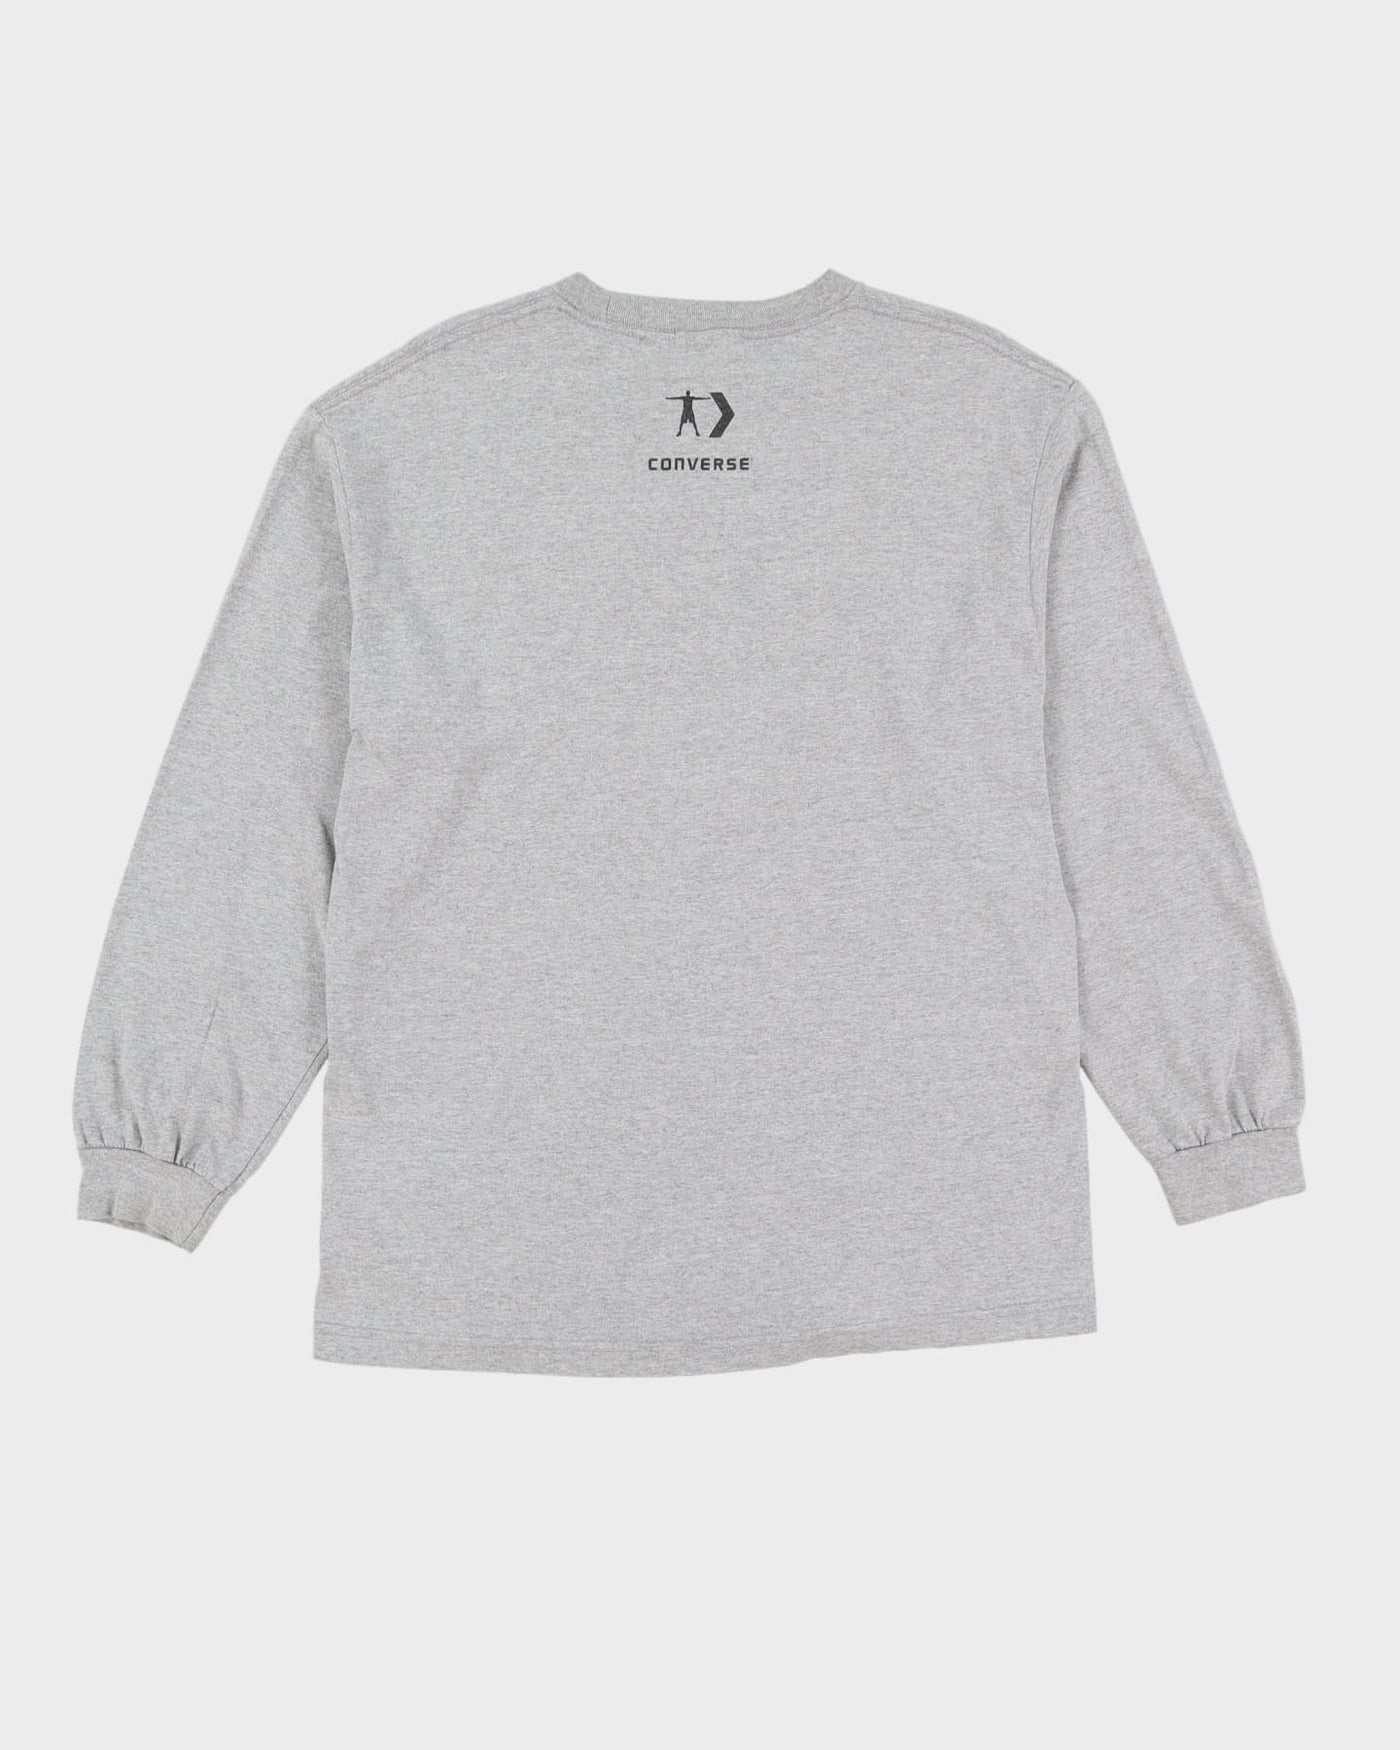 00s Dwayne Wade Converse Grey Long Sleeve T-Shirt - M